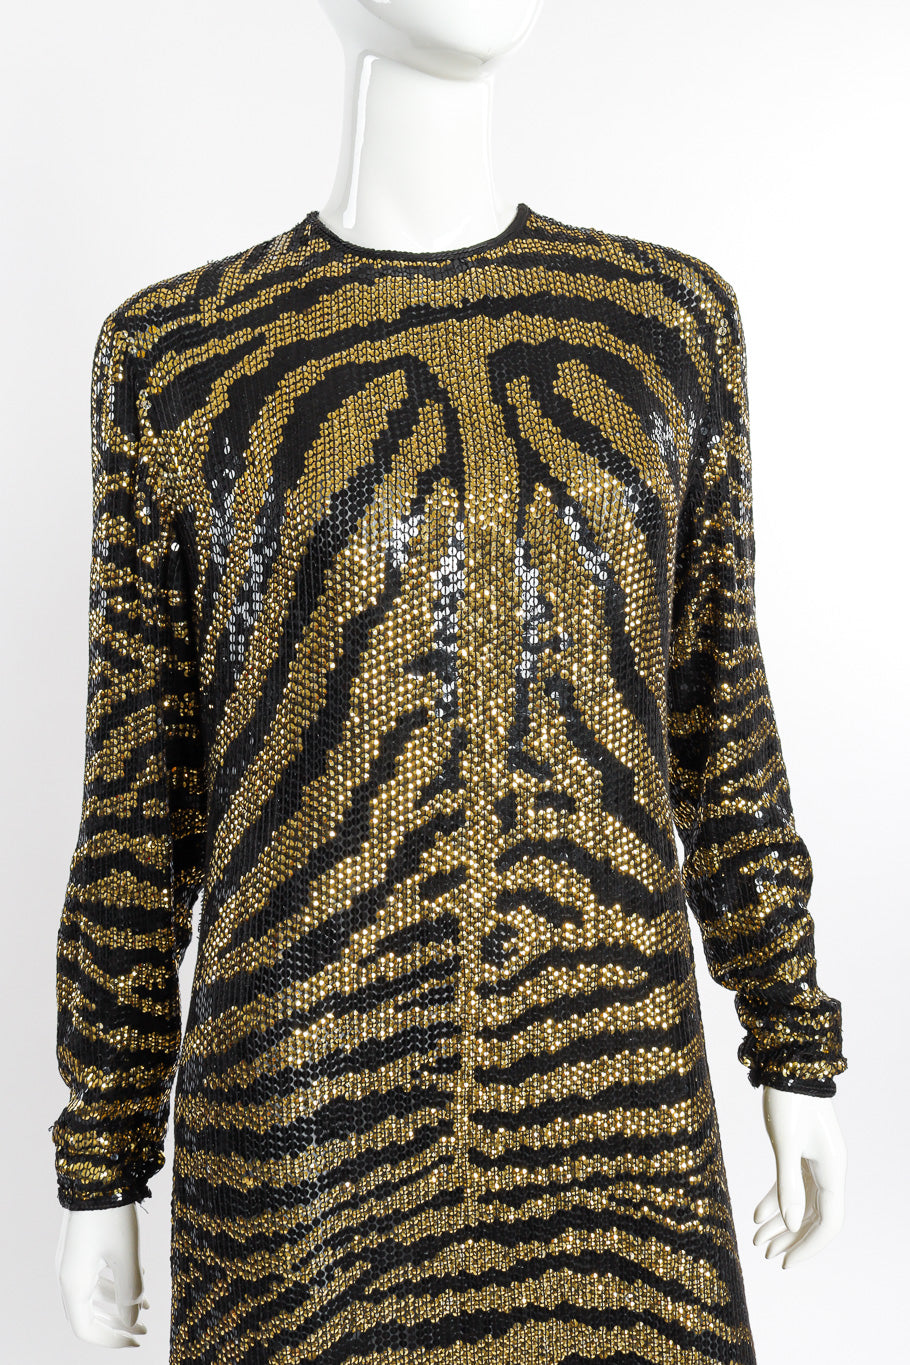 Vintage Halston Tiger Sequin Sheath Gown front on mannequin closeup @recessla